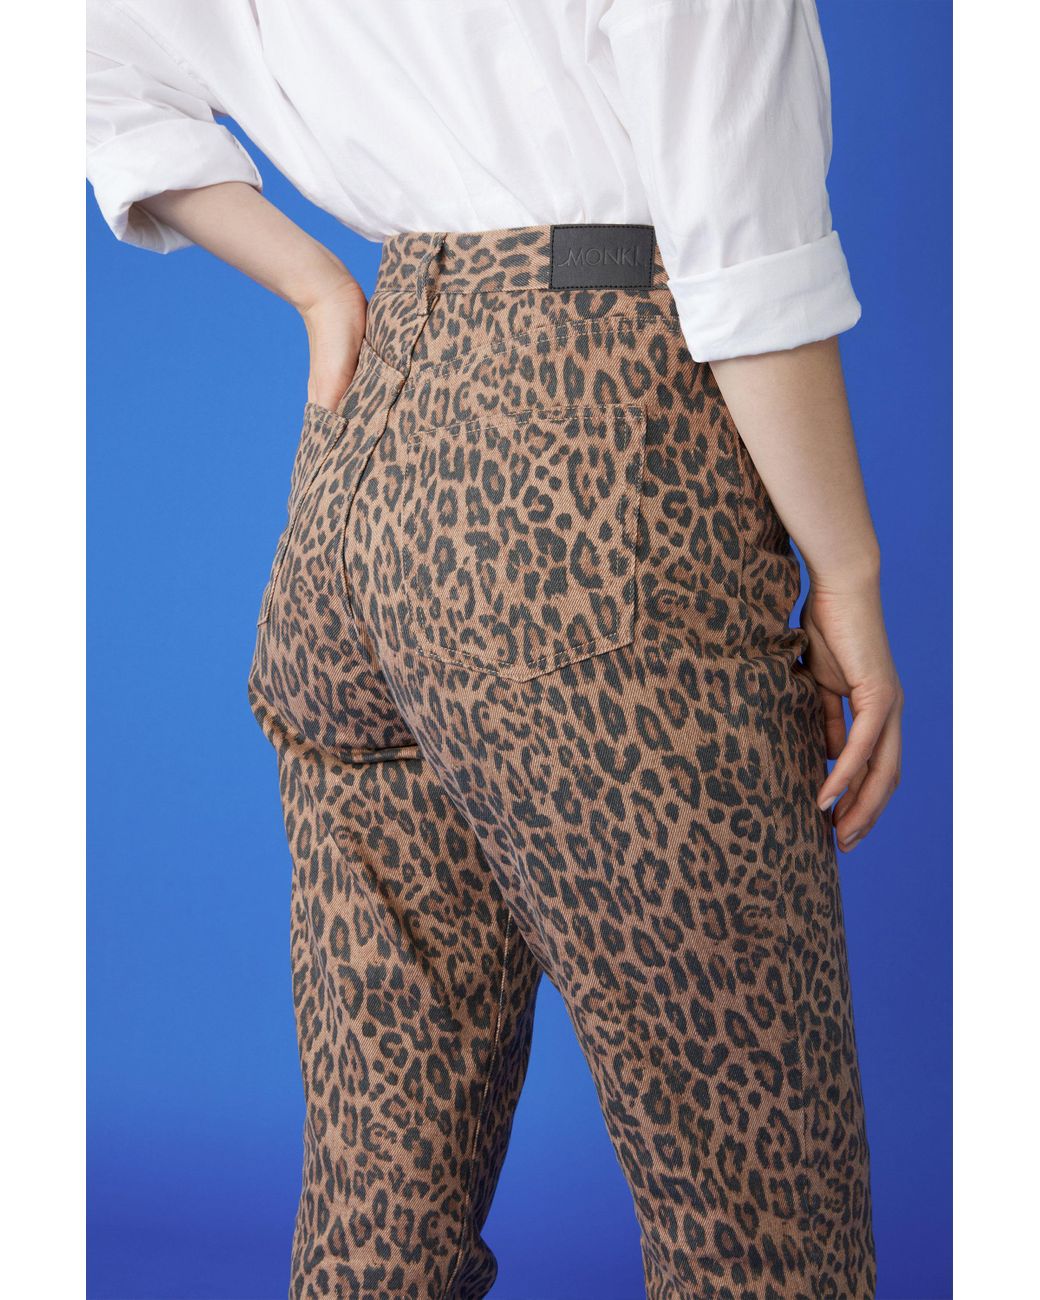 Monki Taiki Leopard Jeans | Lyst Canada